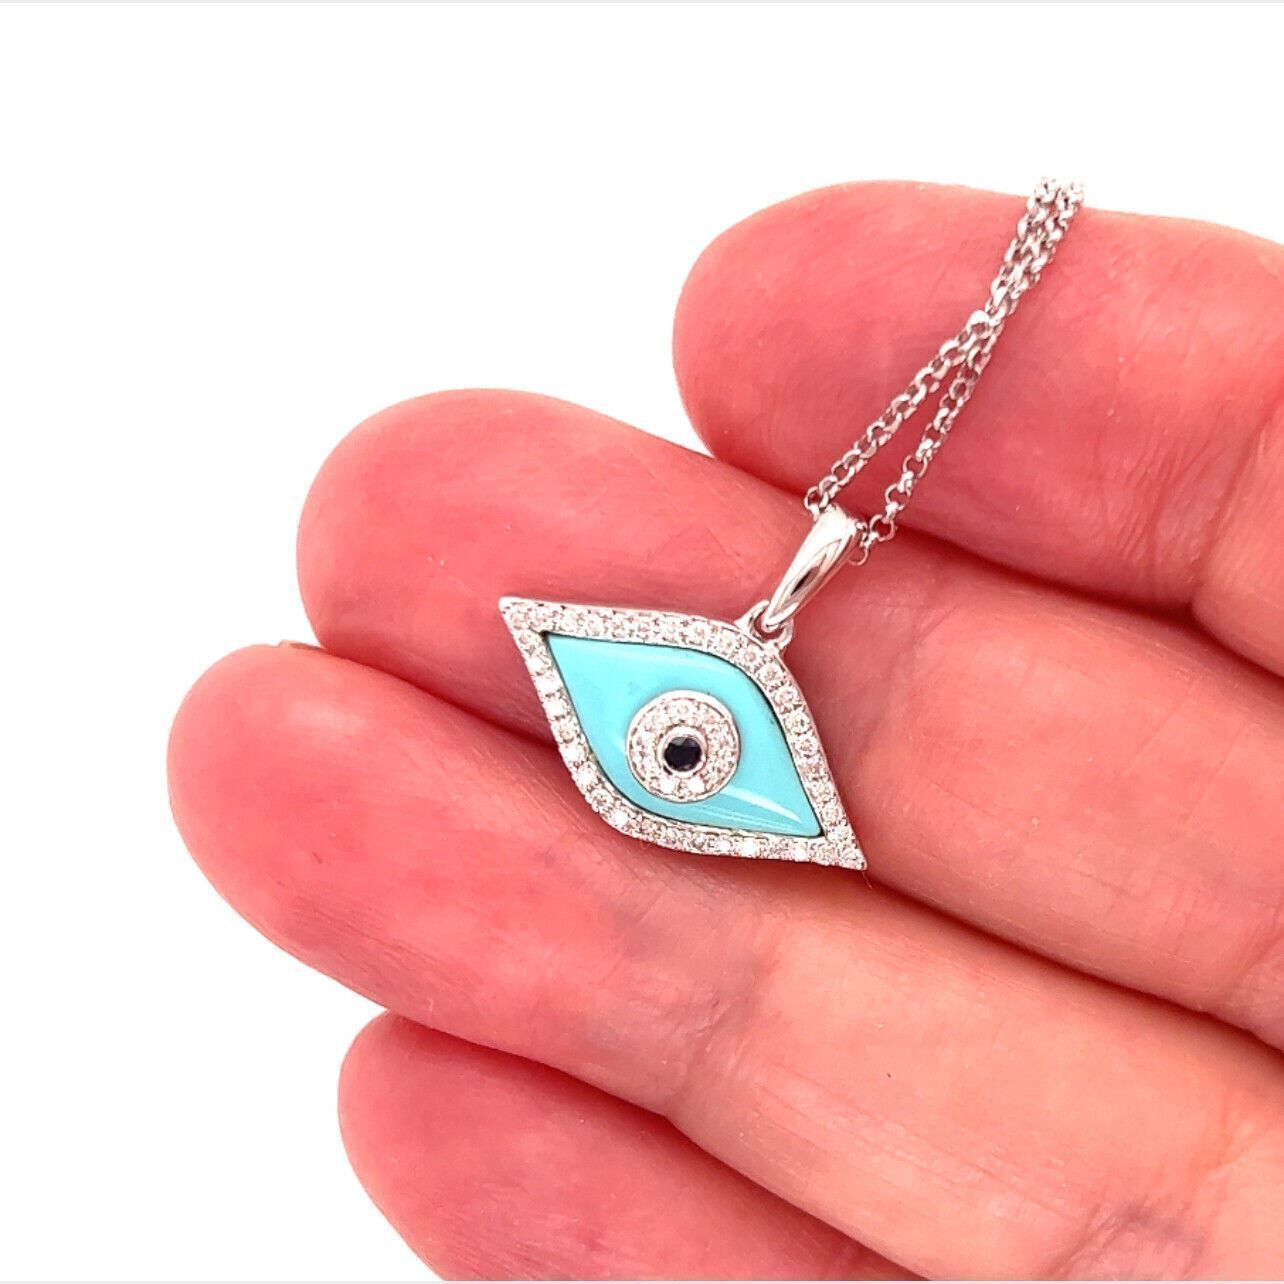 Turquoise Sapphire Evil Eye 18k White Gold Diamond Pendant Necklace